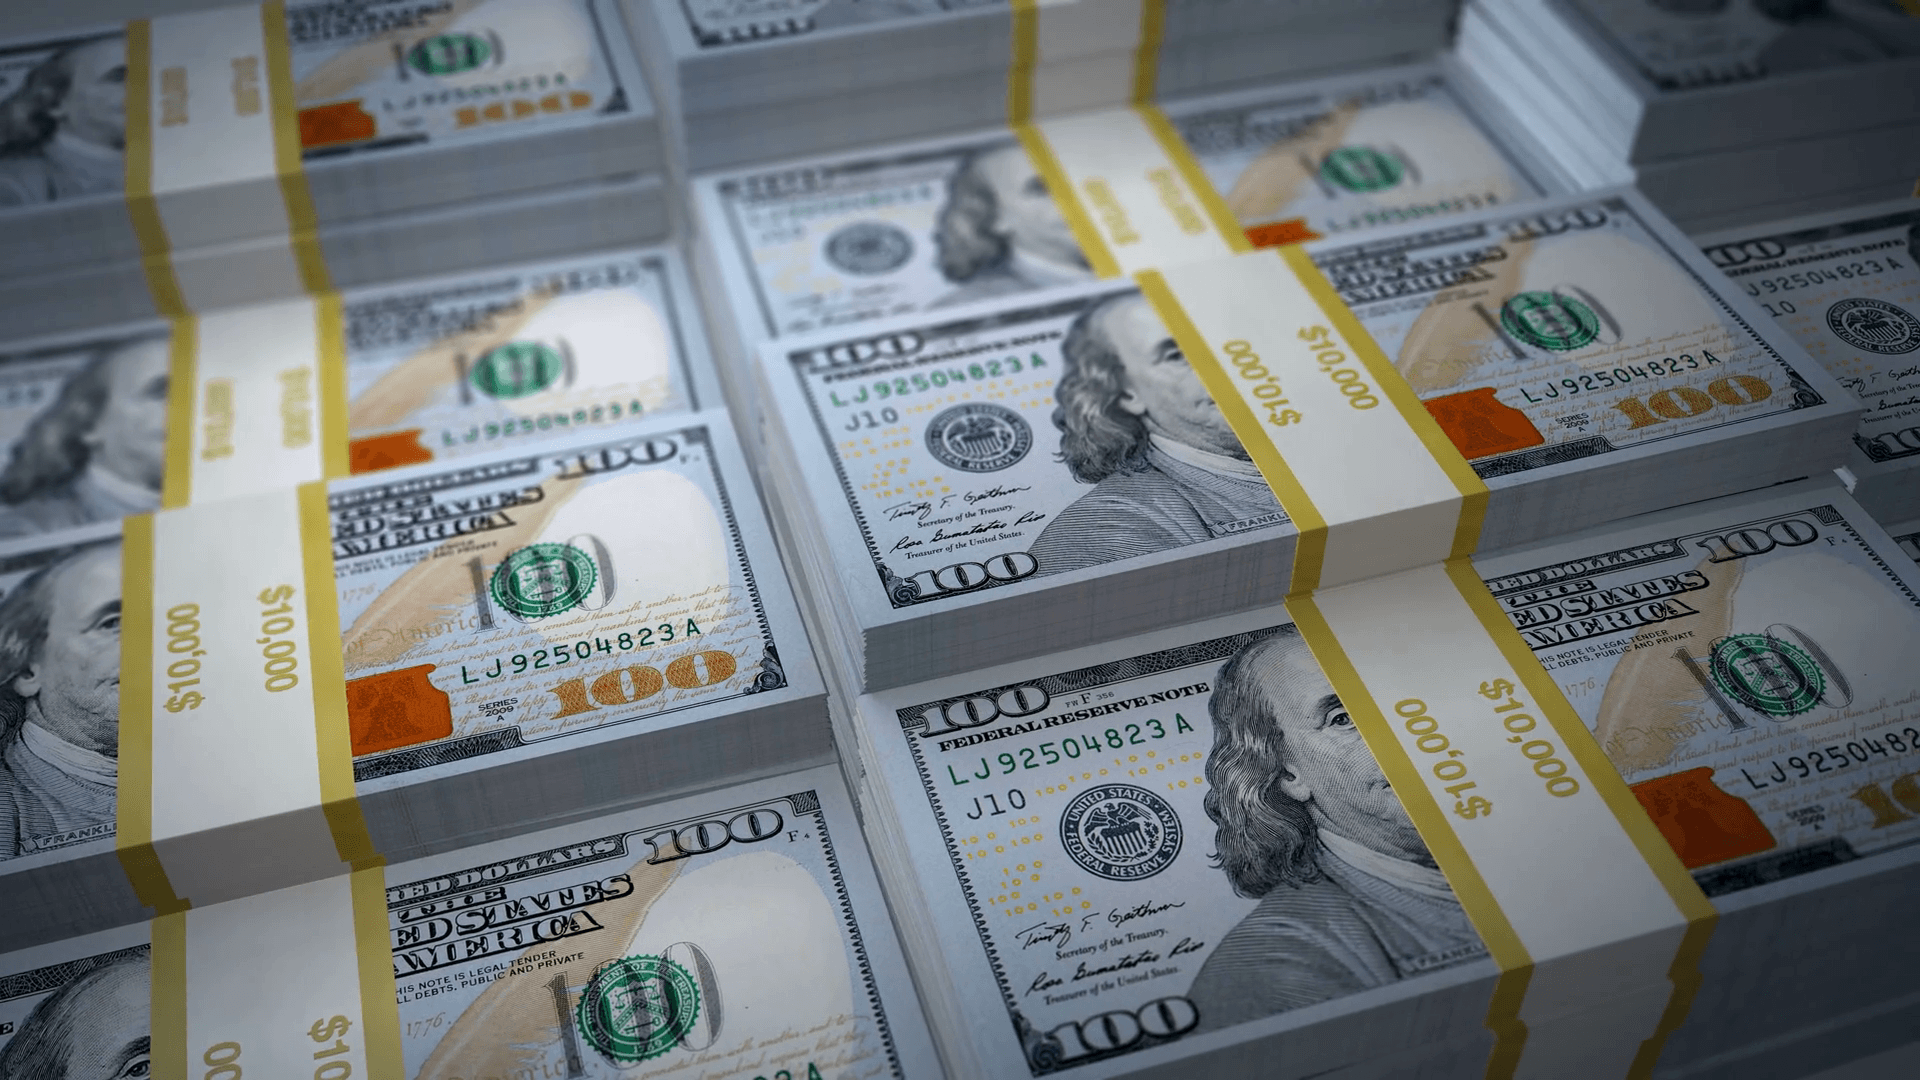 money stack of new 100 dollar bills